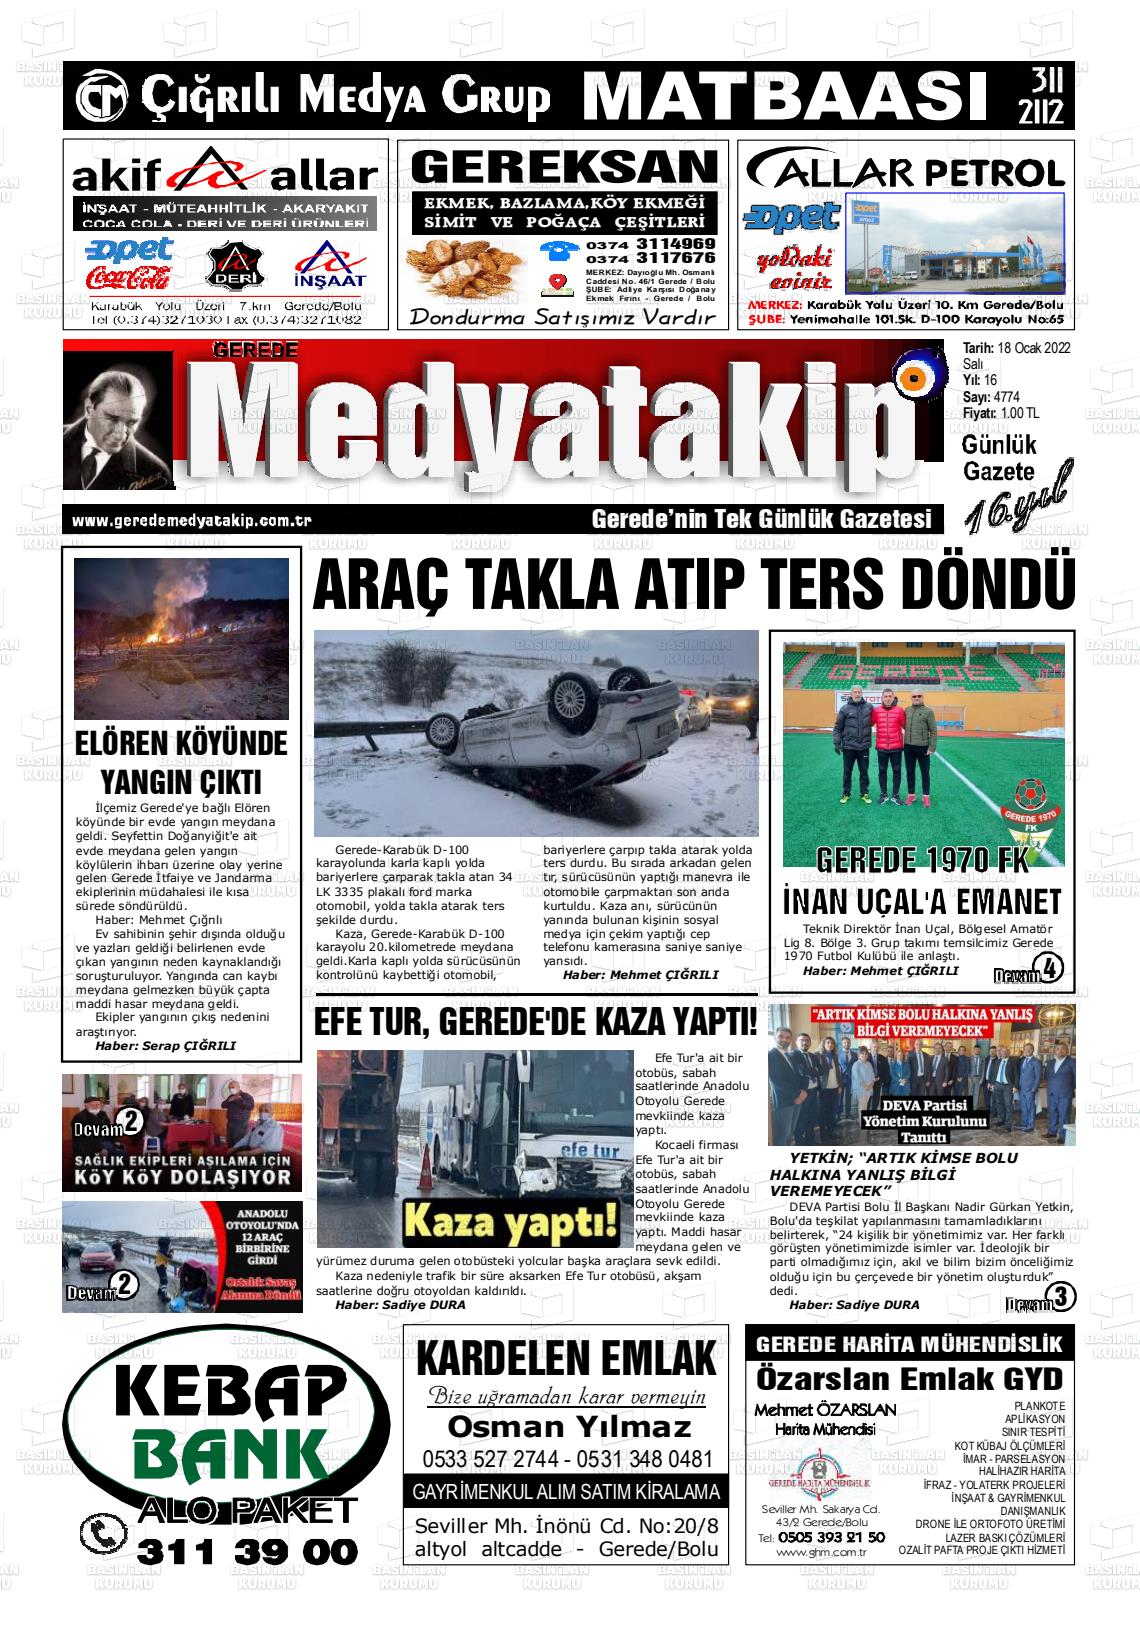 18 Ocak 2022 Gerede Medya Takip Gazete Manşeti